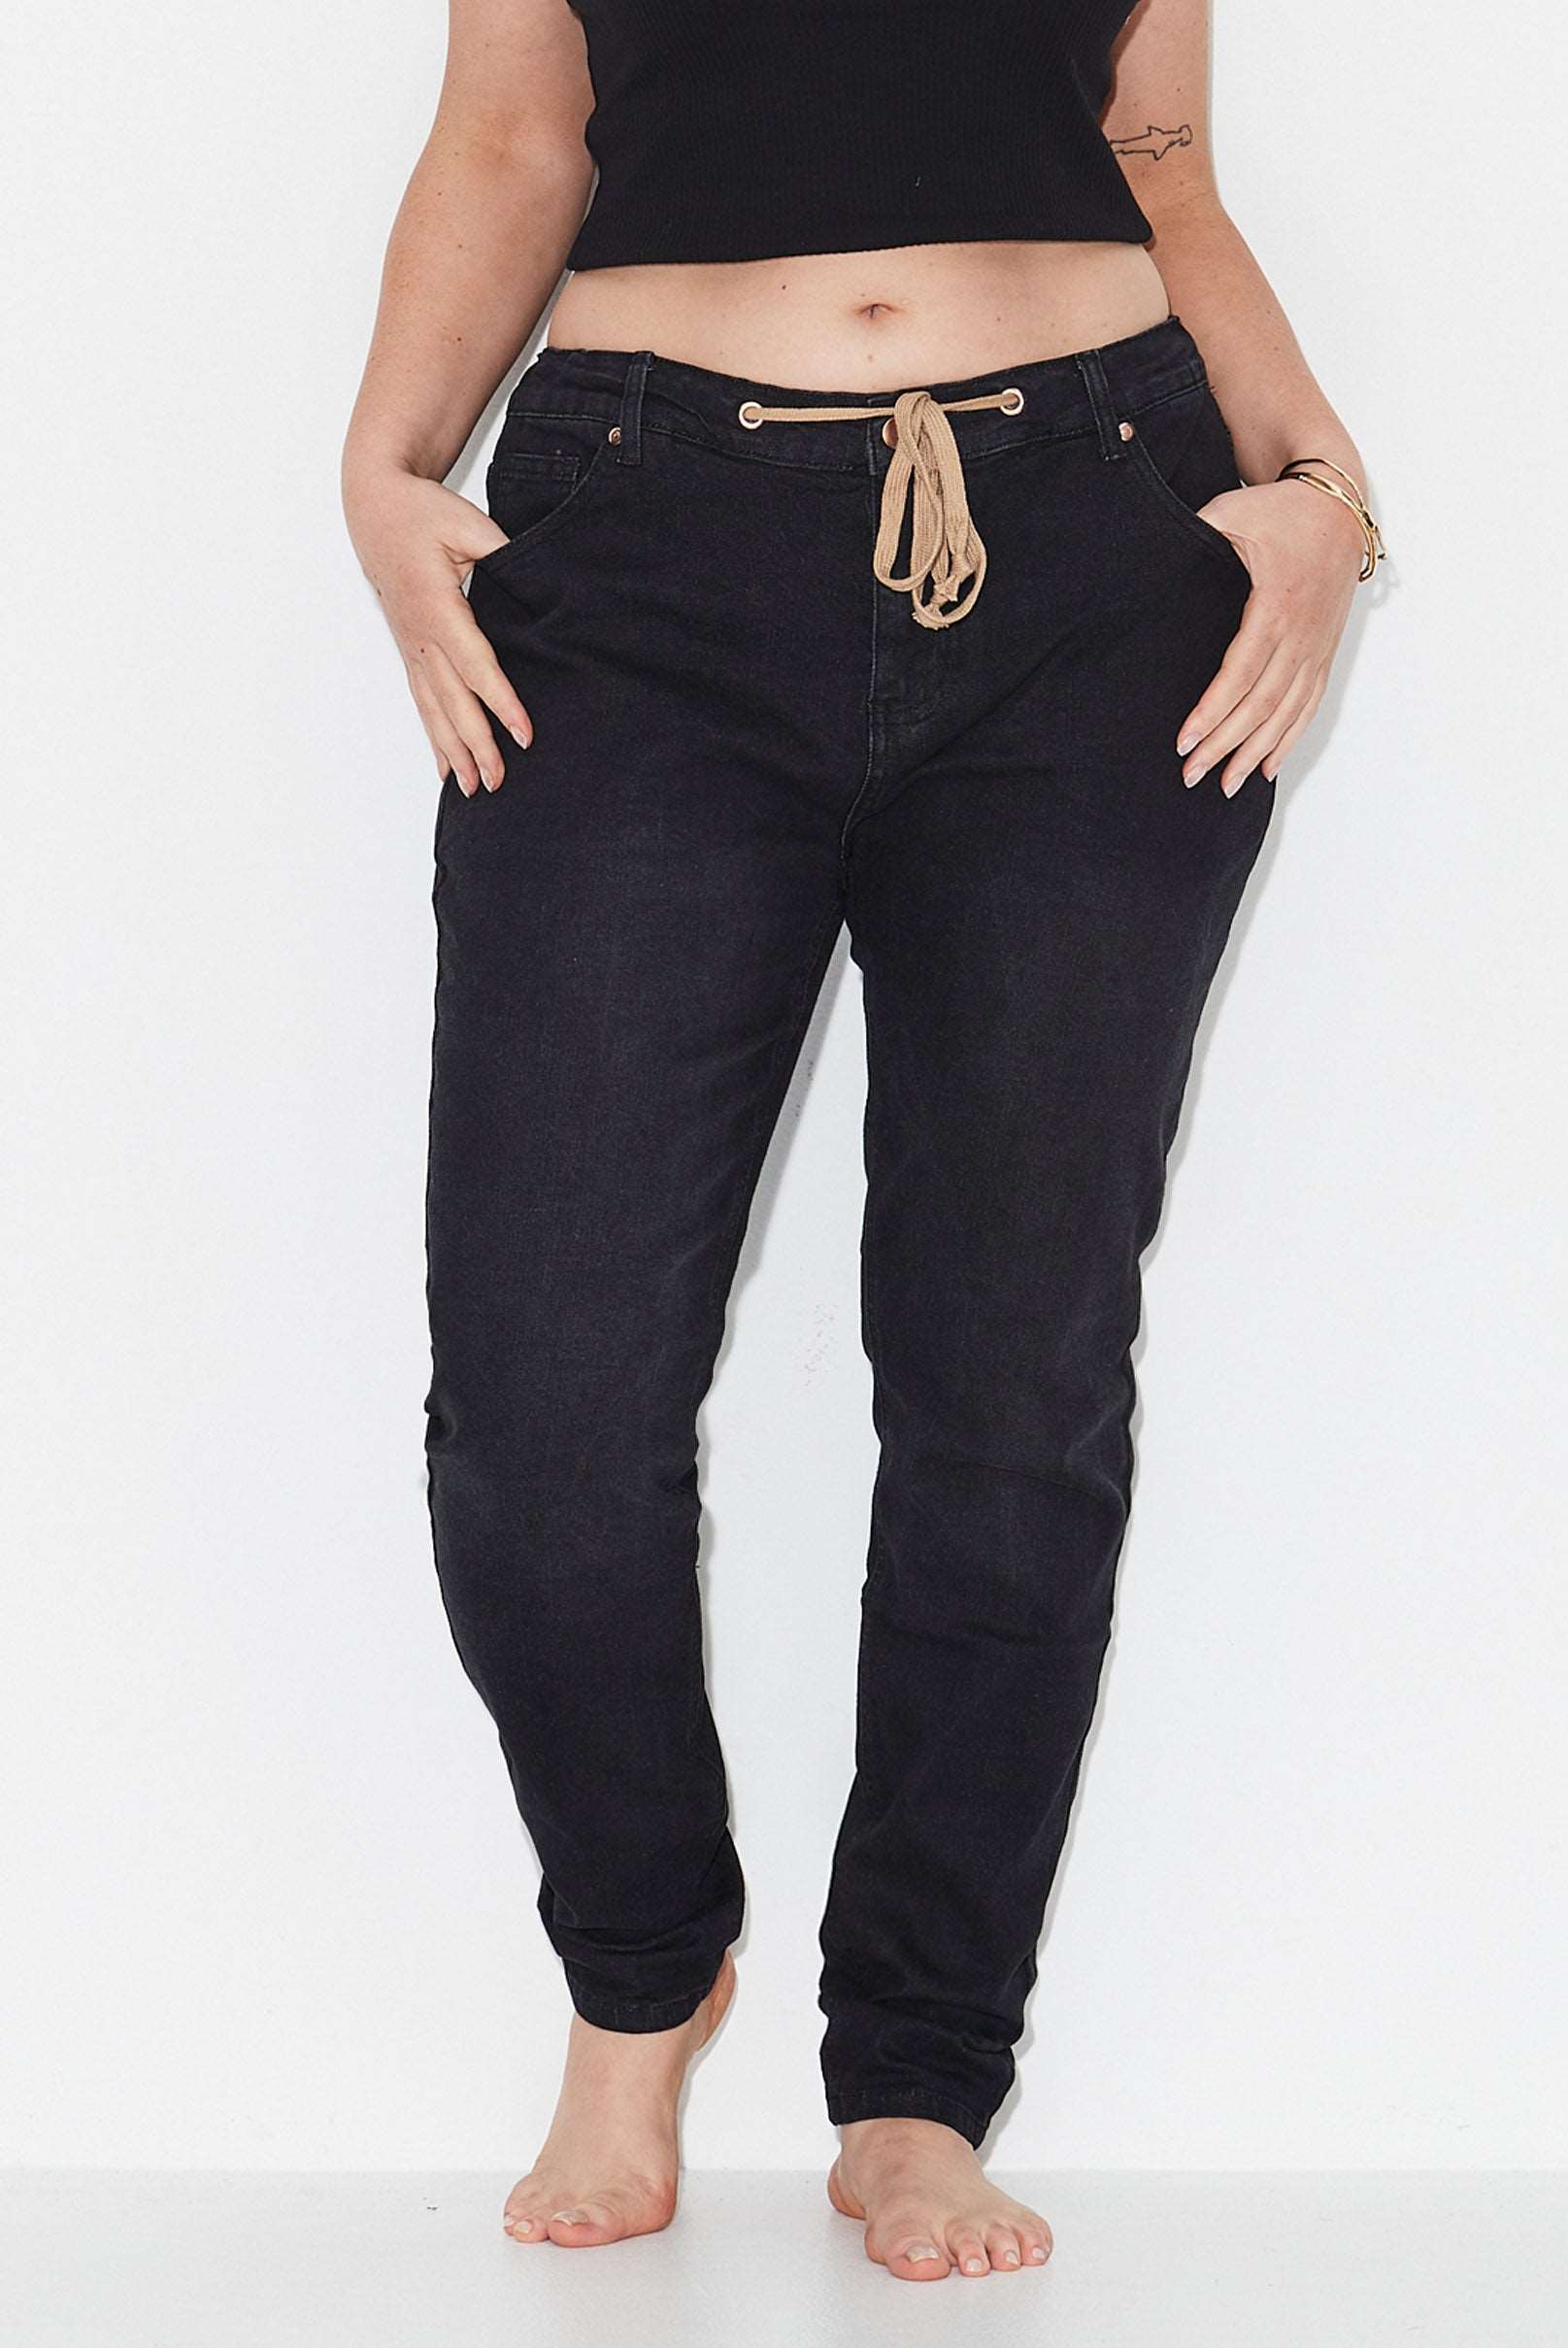 Model wears black slim leg plus size jeans with adjustable waist tie